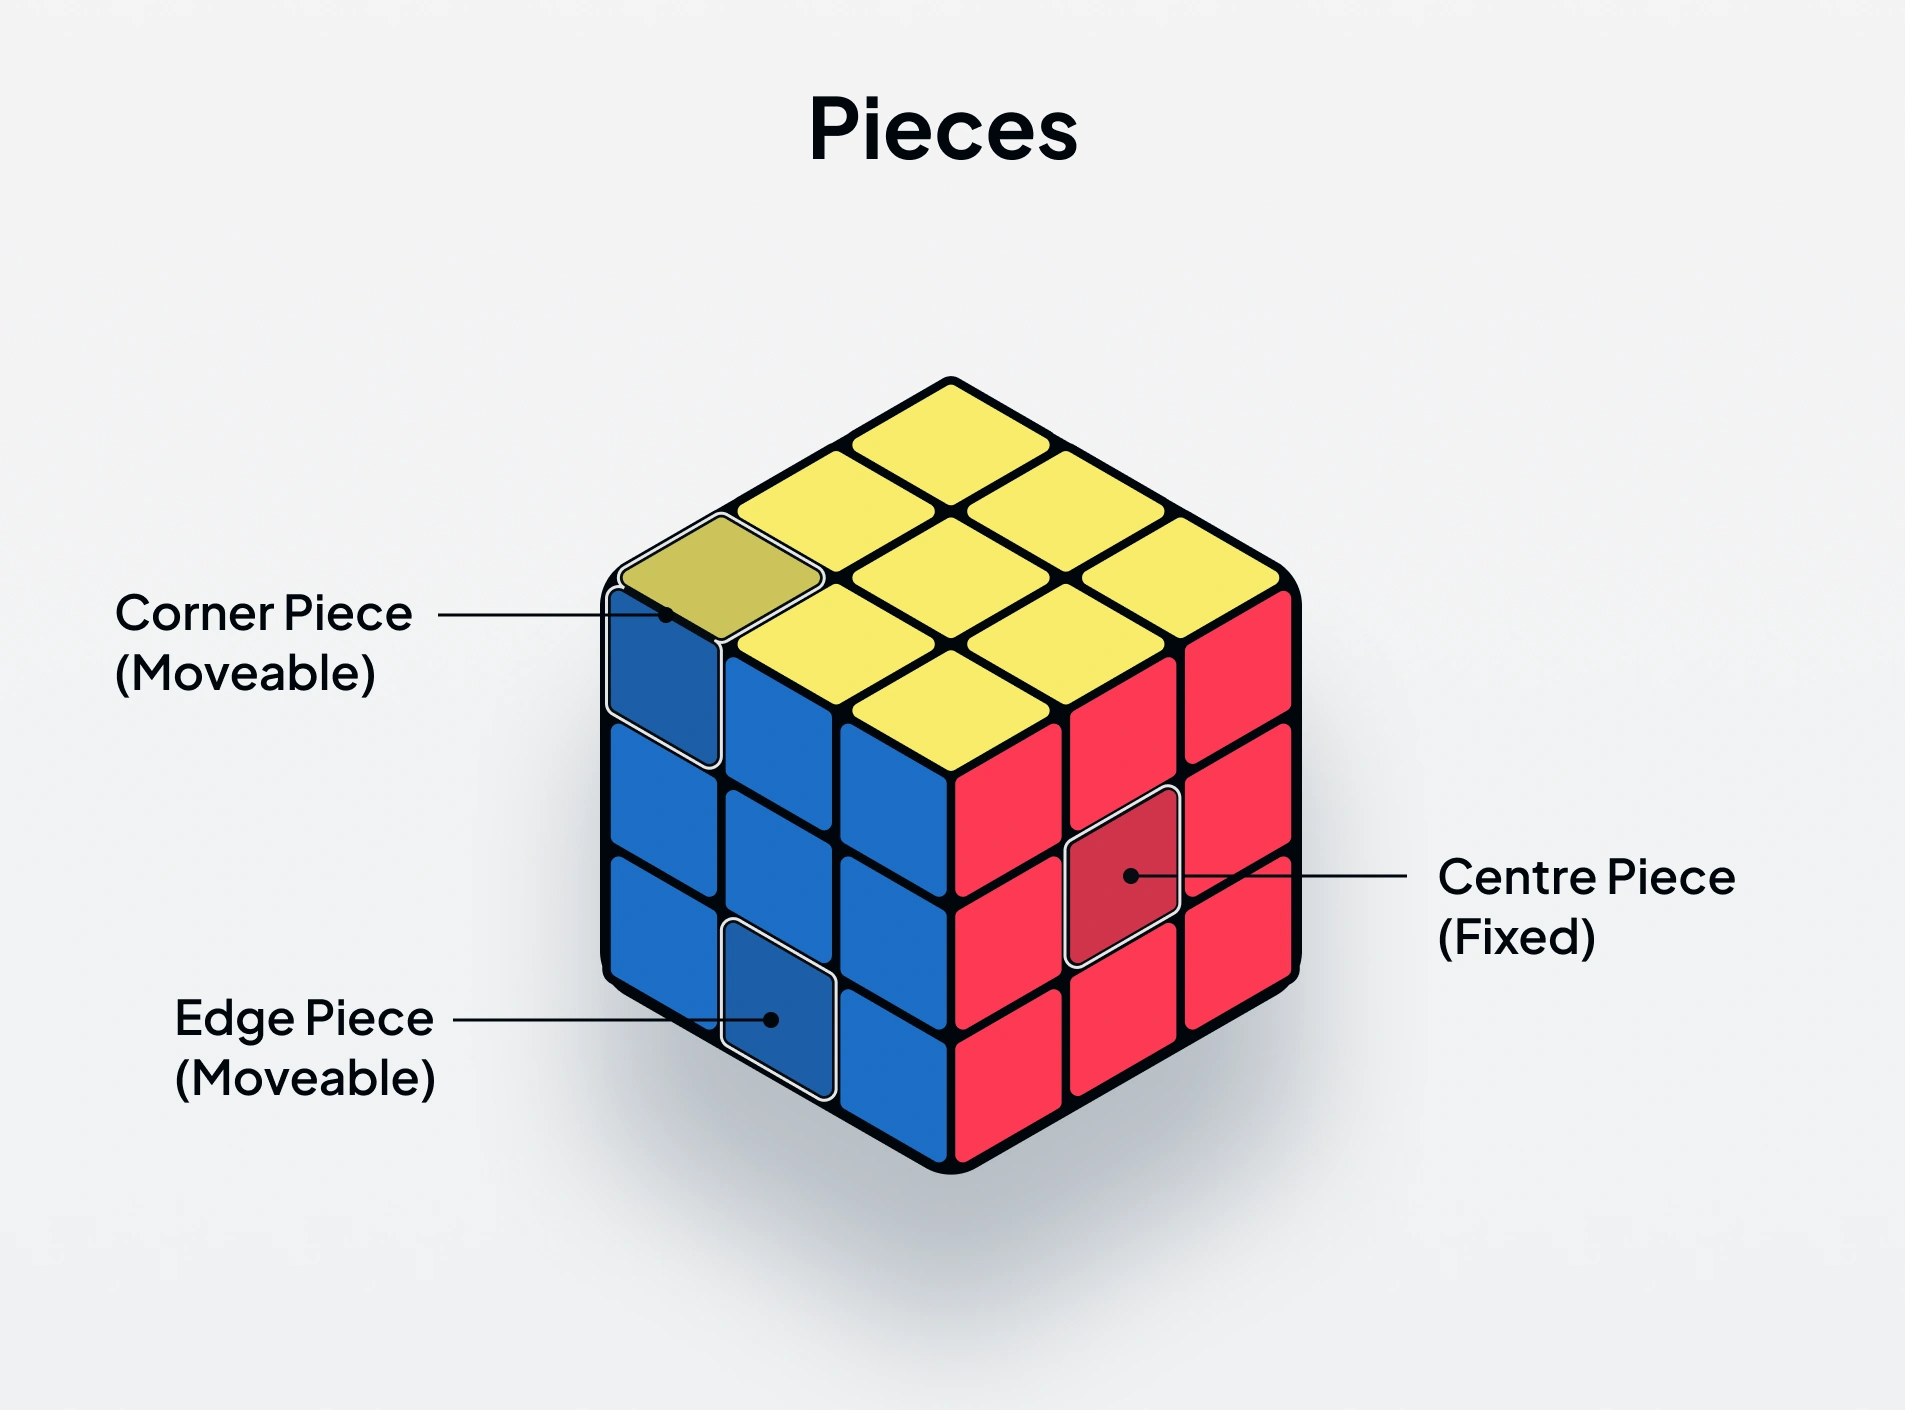 10 Benefits of Rubik's Cube - ipassio